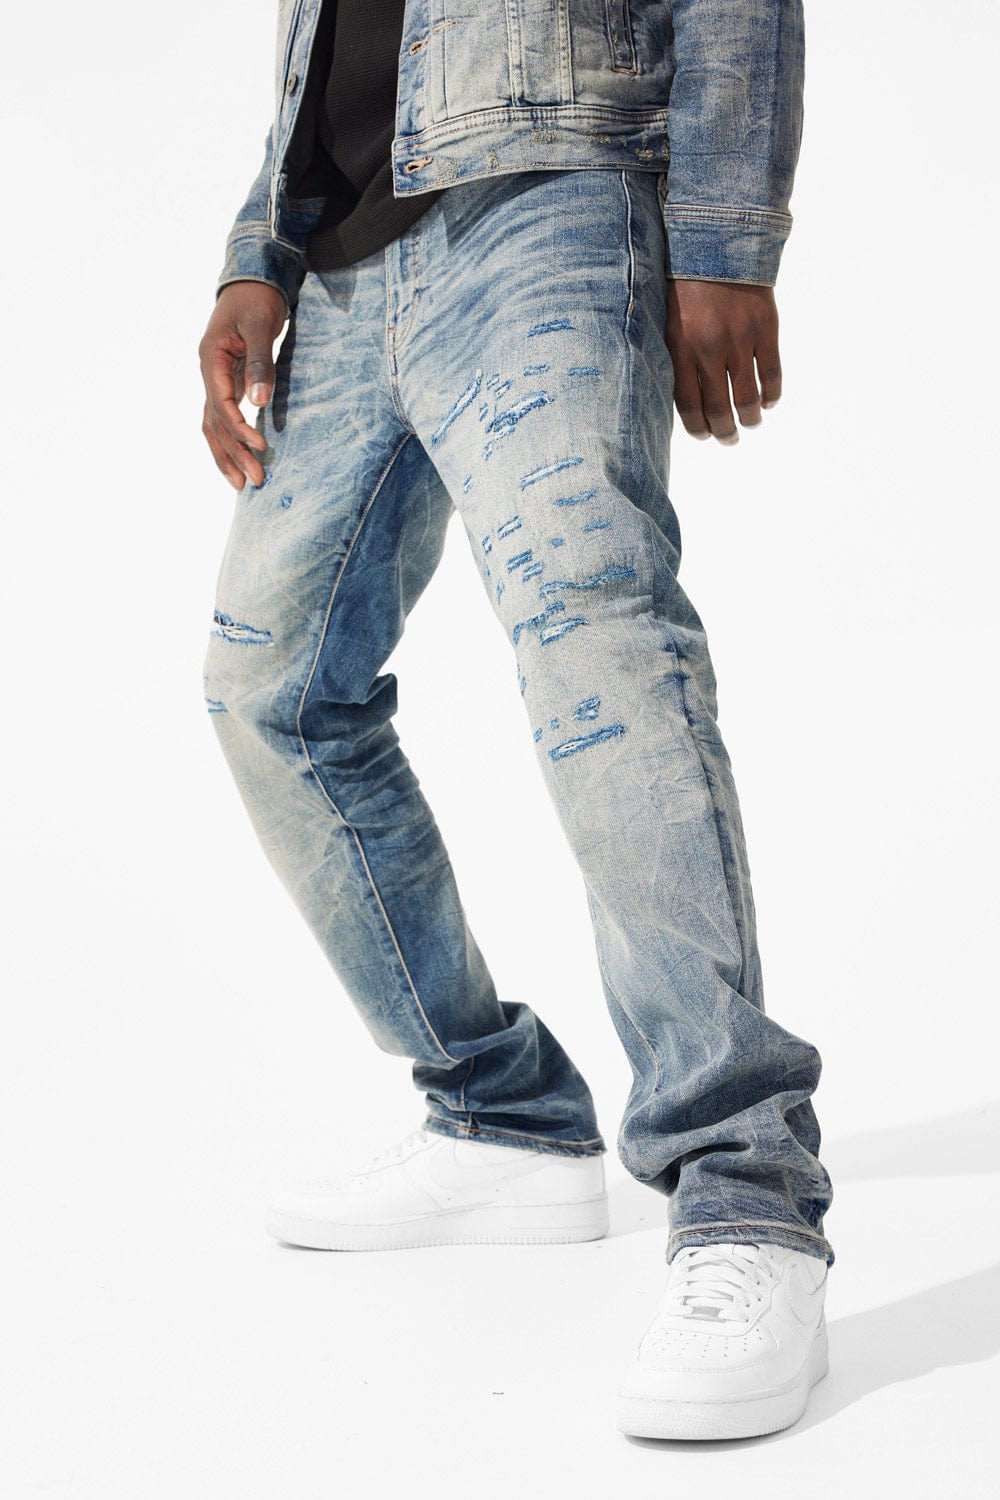 Collins - Amsterdam Azure Denim Jeans - Antique